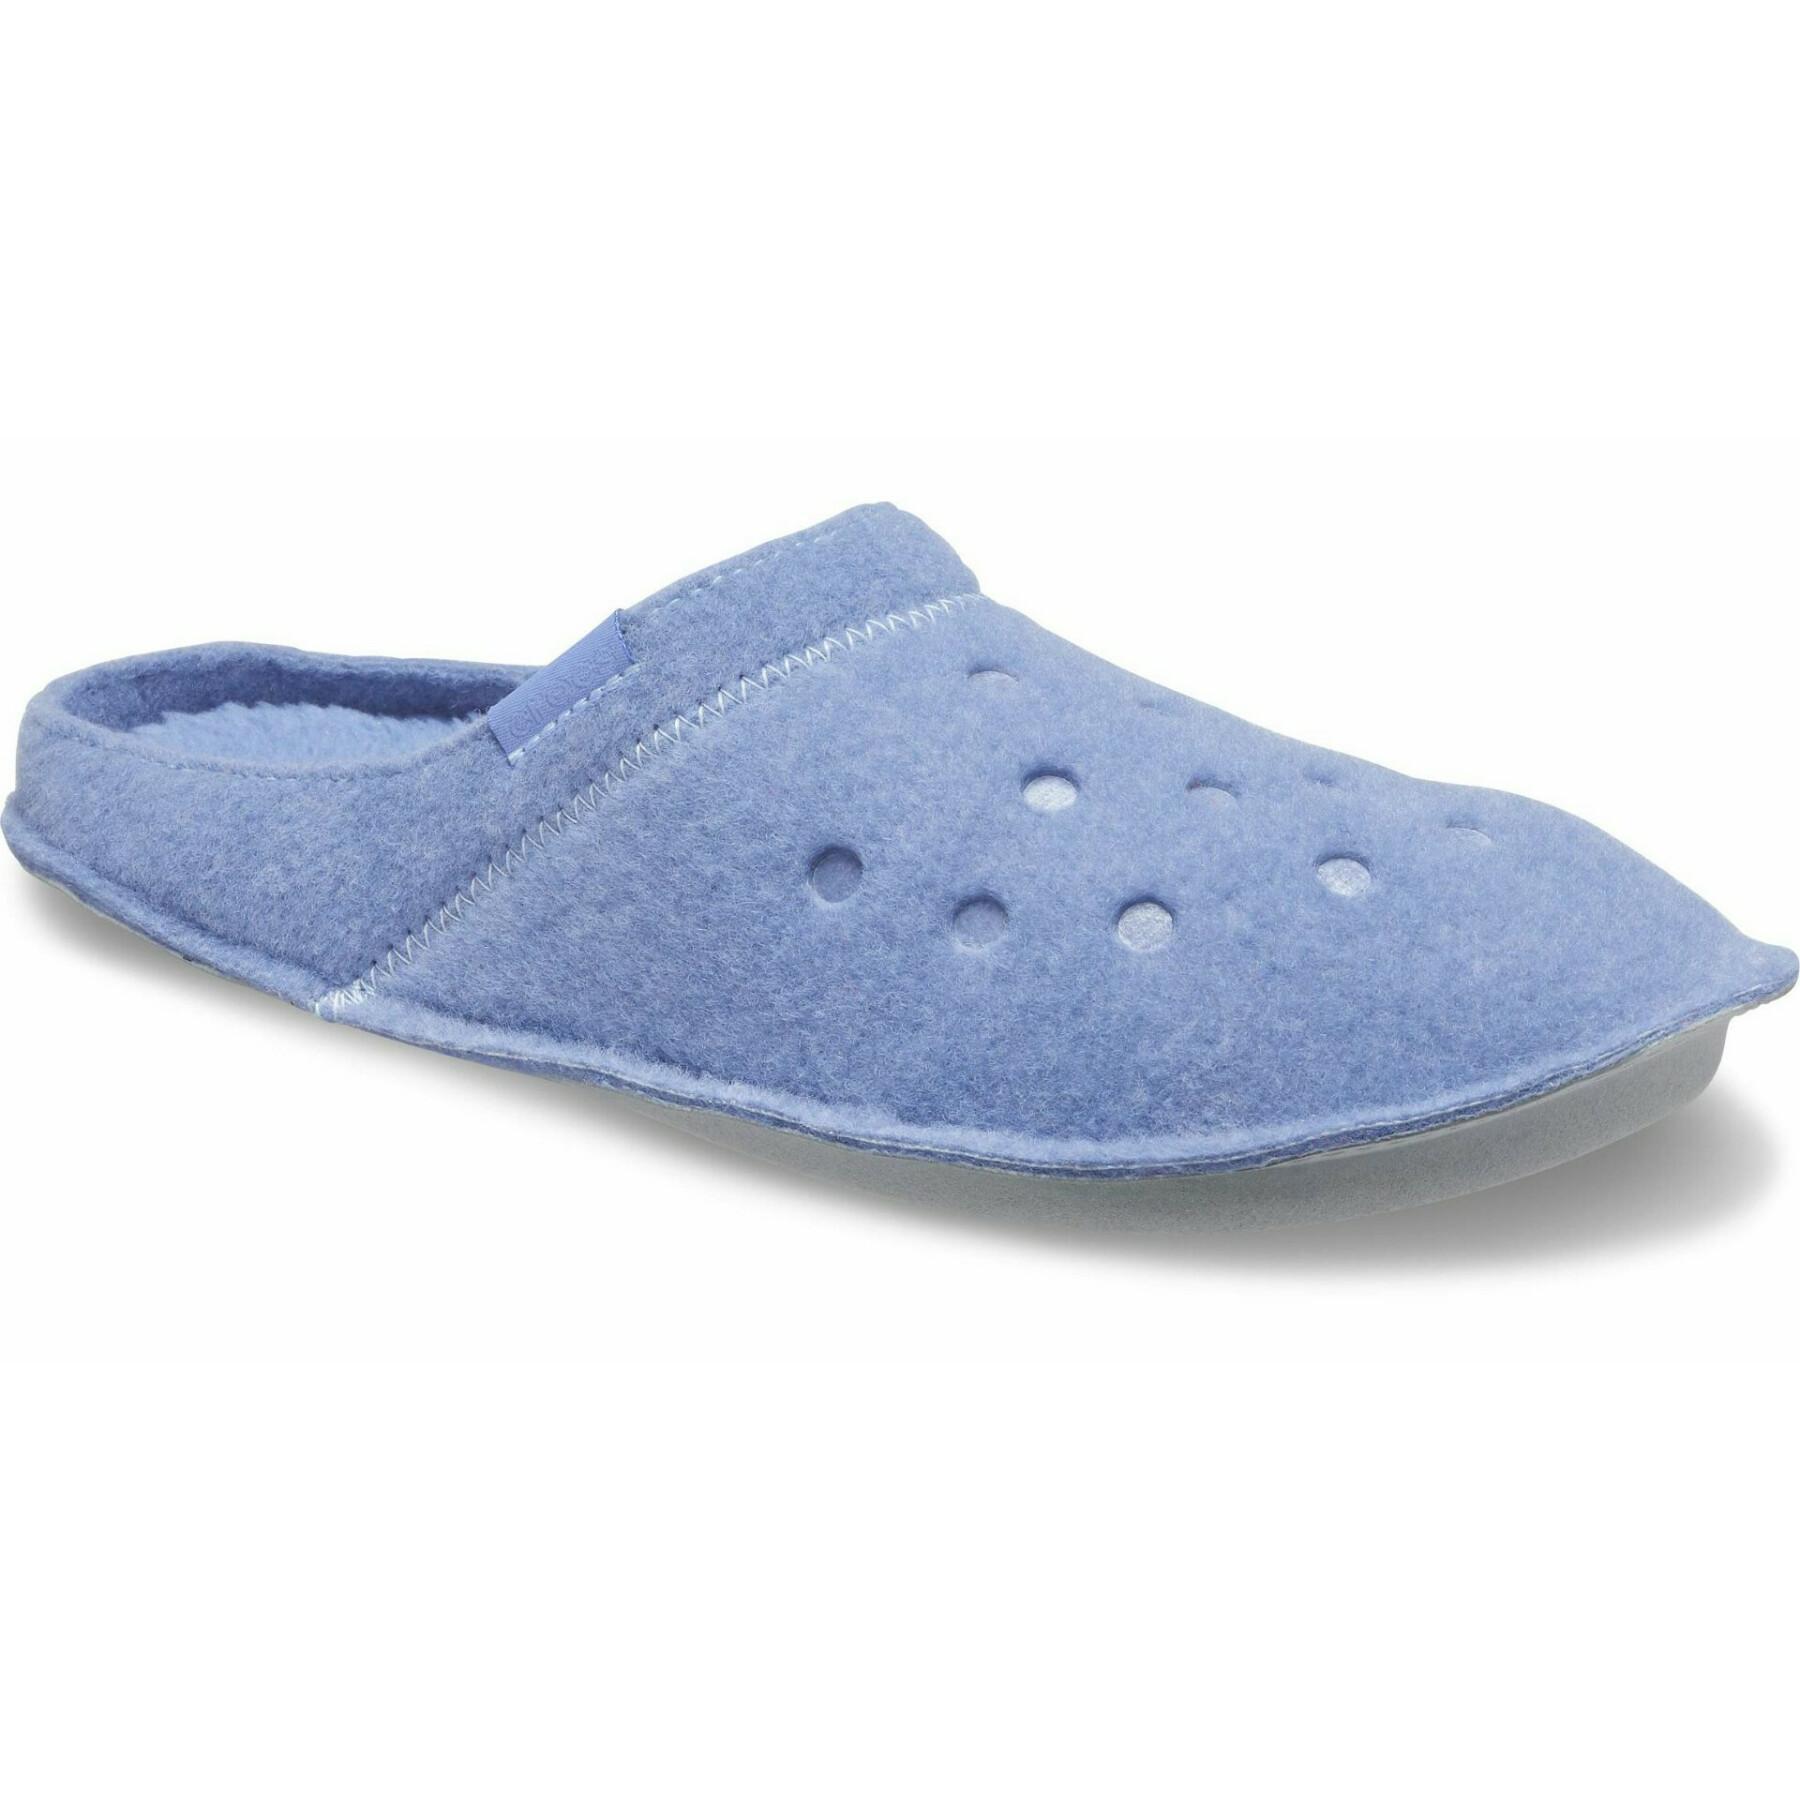 Pantoufles Crocs classic slipper